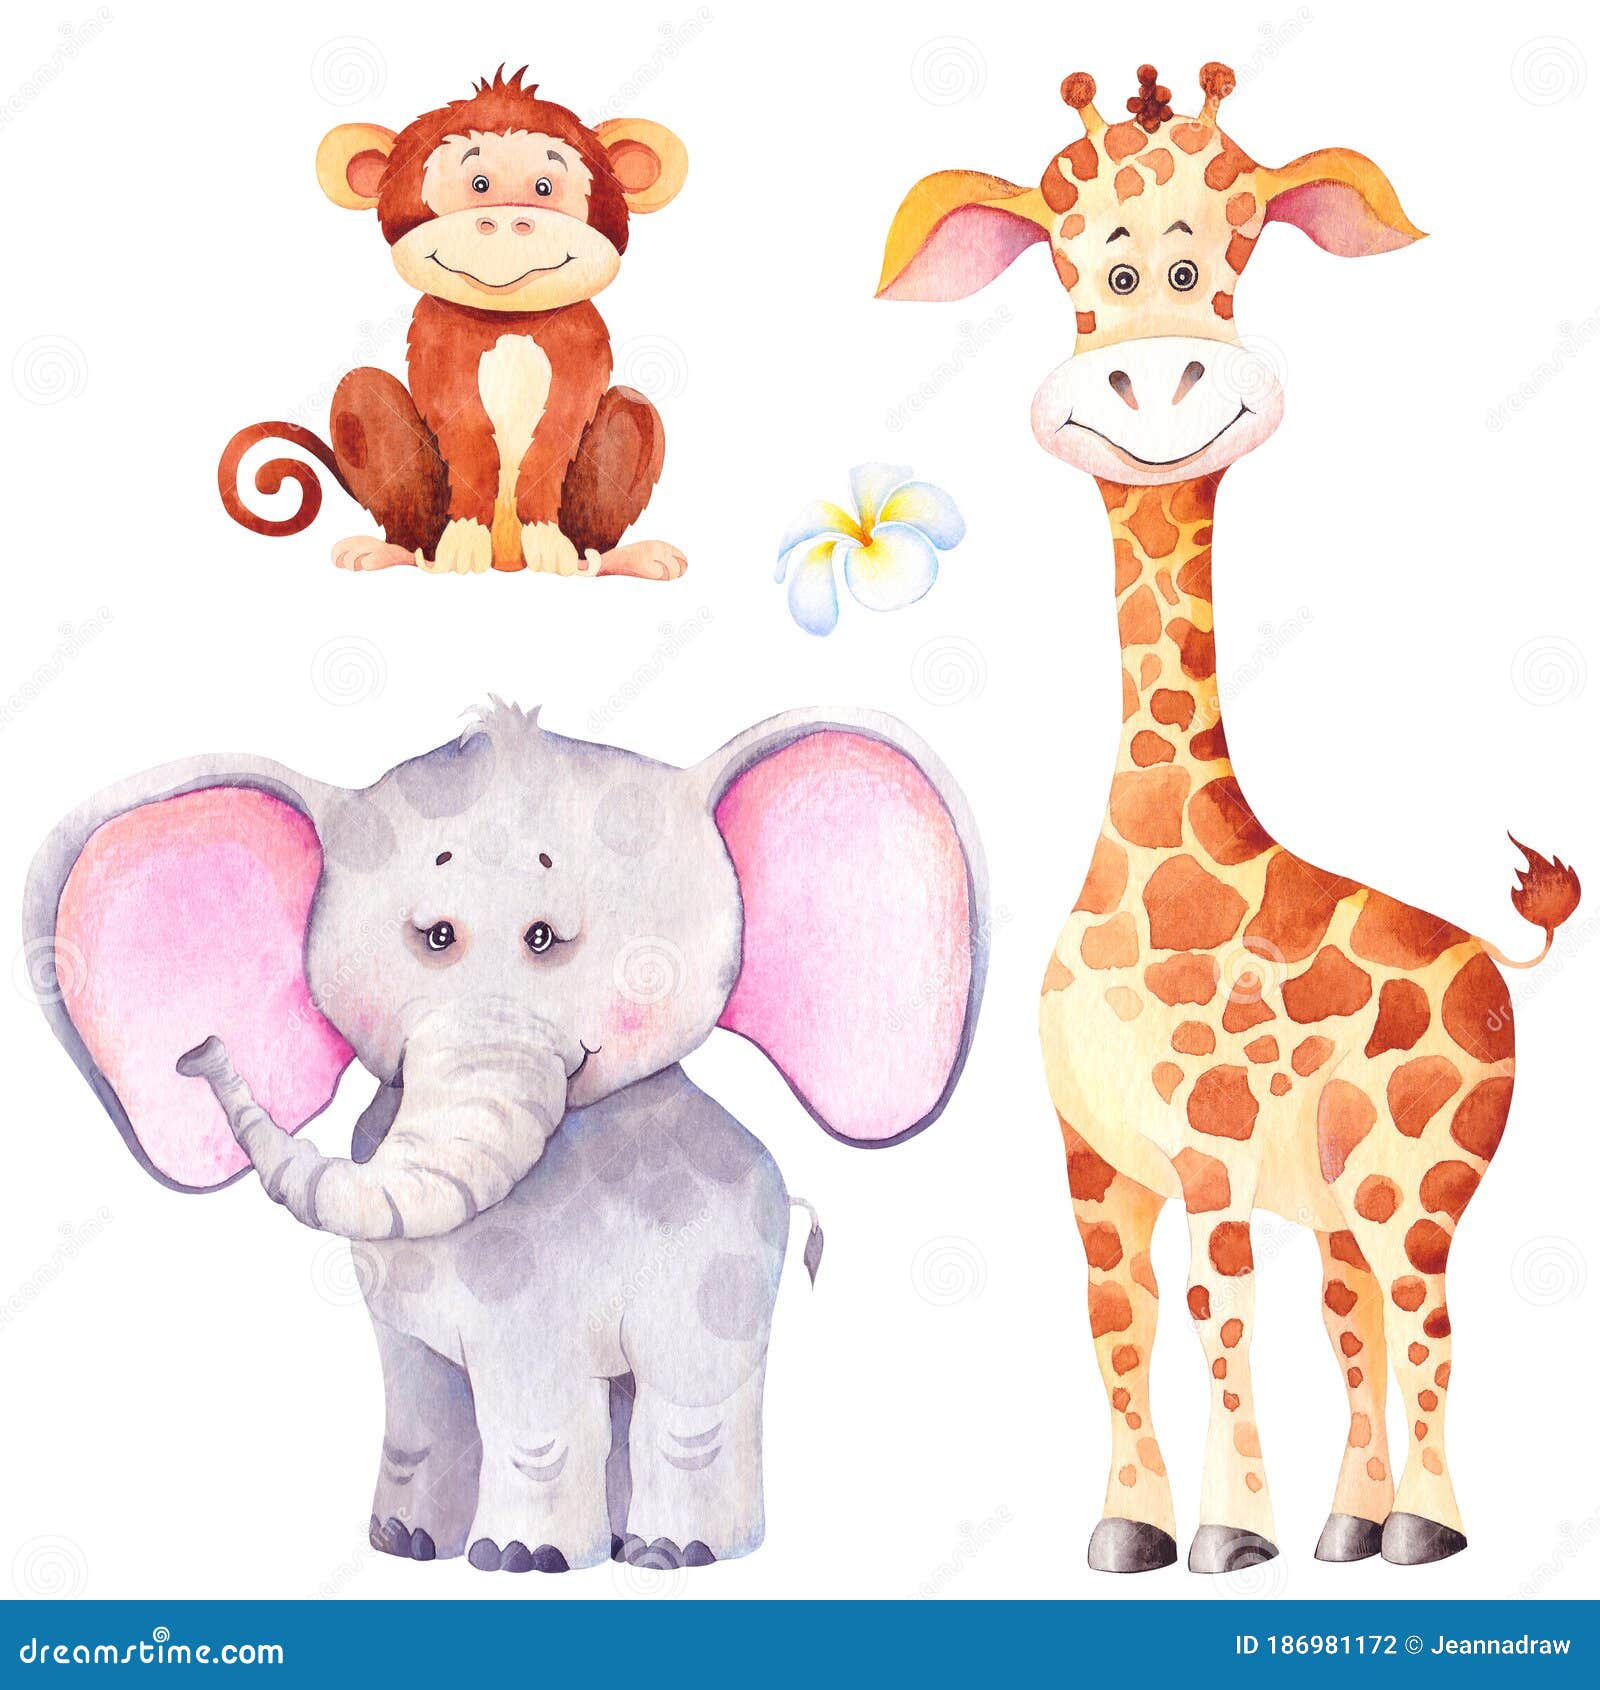 Giraffe elephant monkey. Жирафчик и Слоненок рисунок. Слон Жираф обезьяна. Обезьянка на жирафе. Маленький Жирафик и слон.